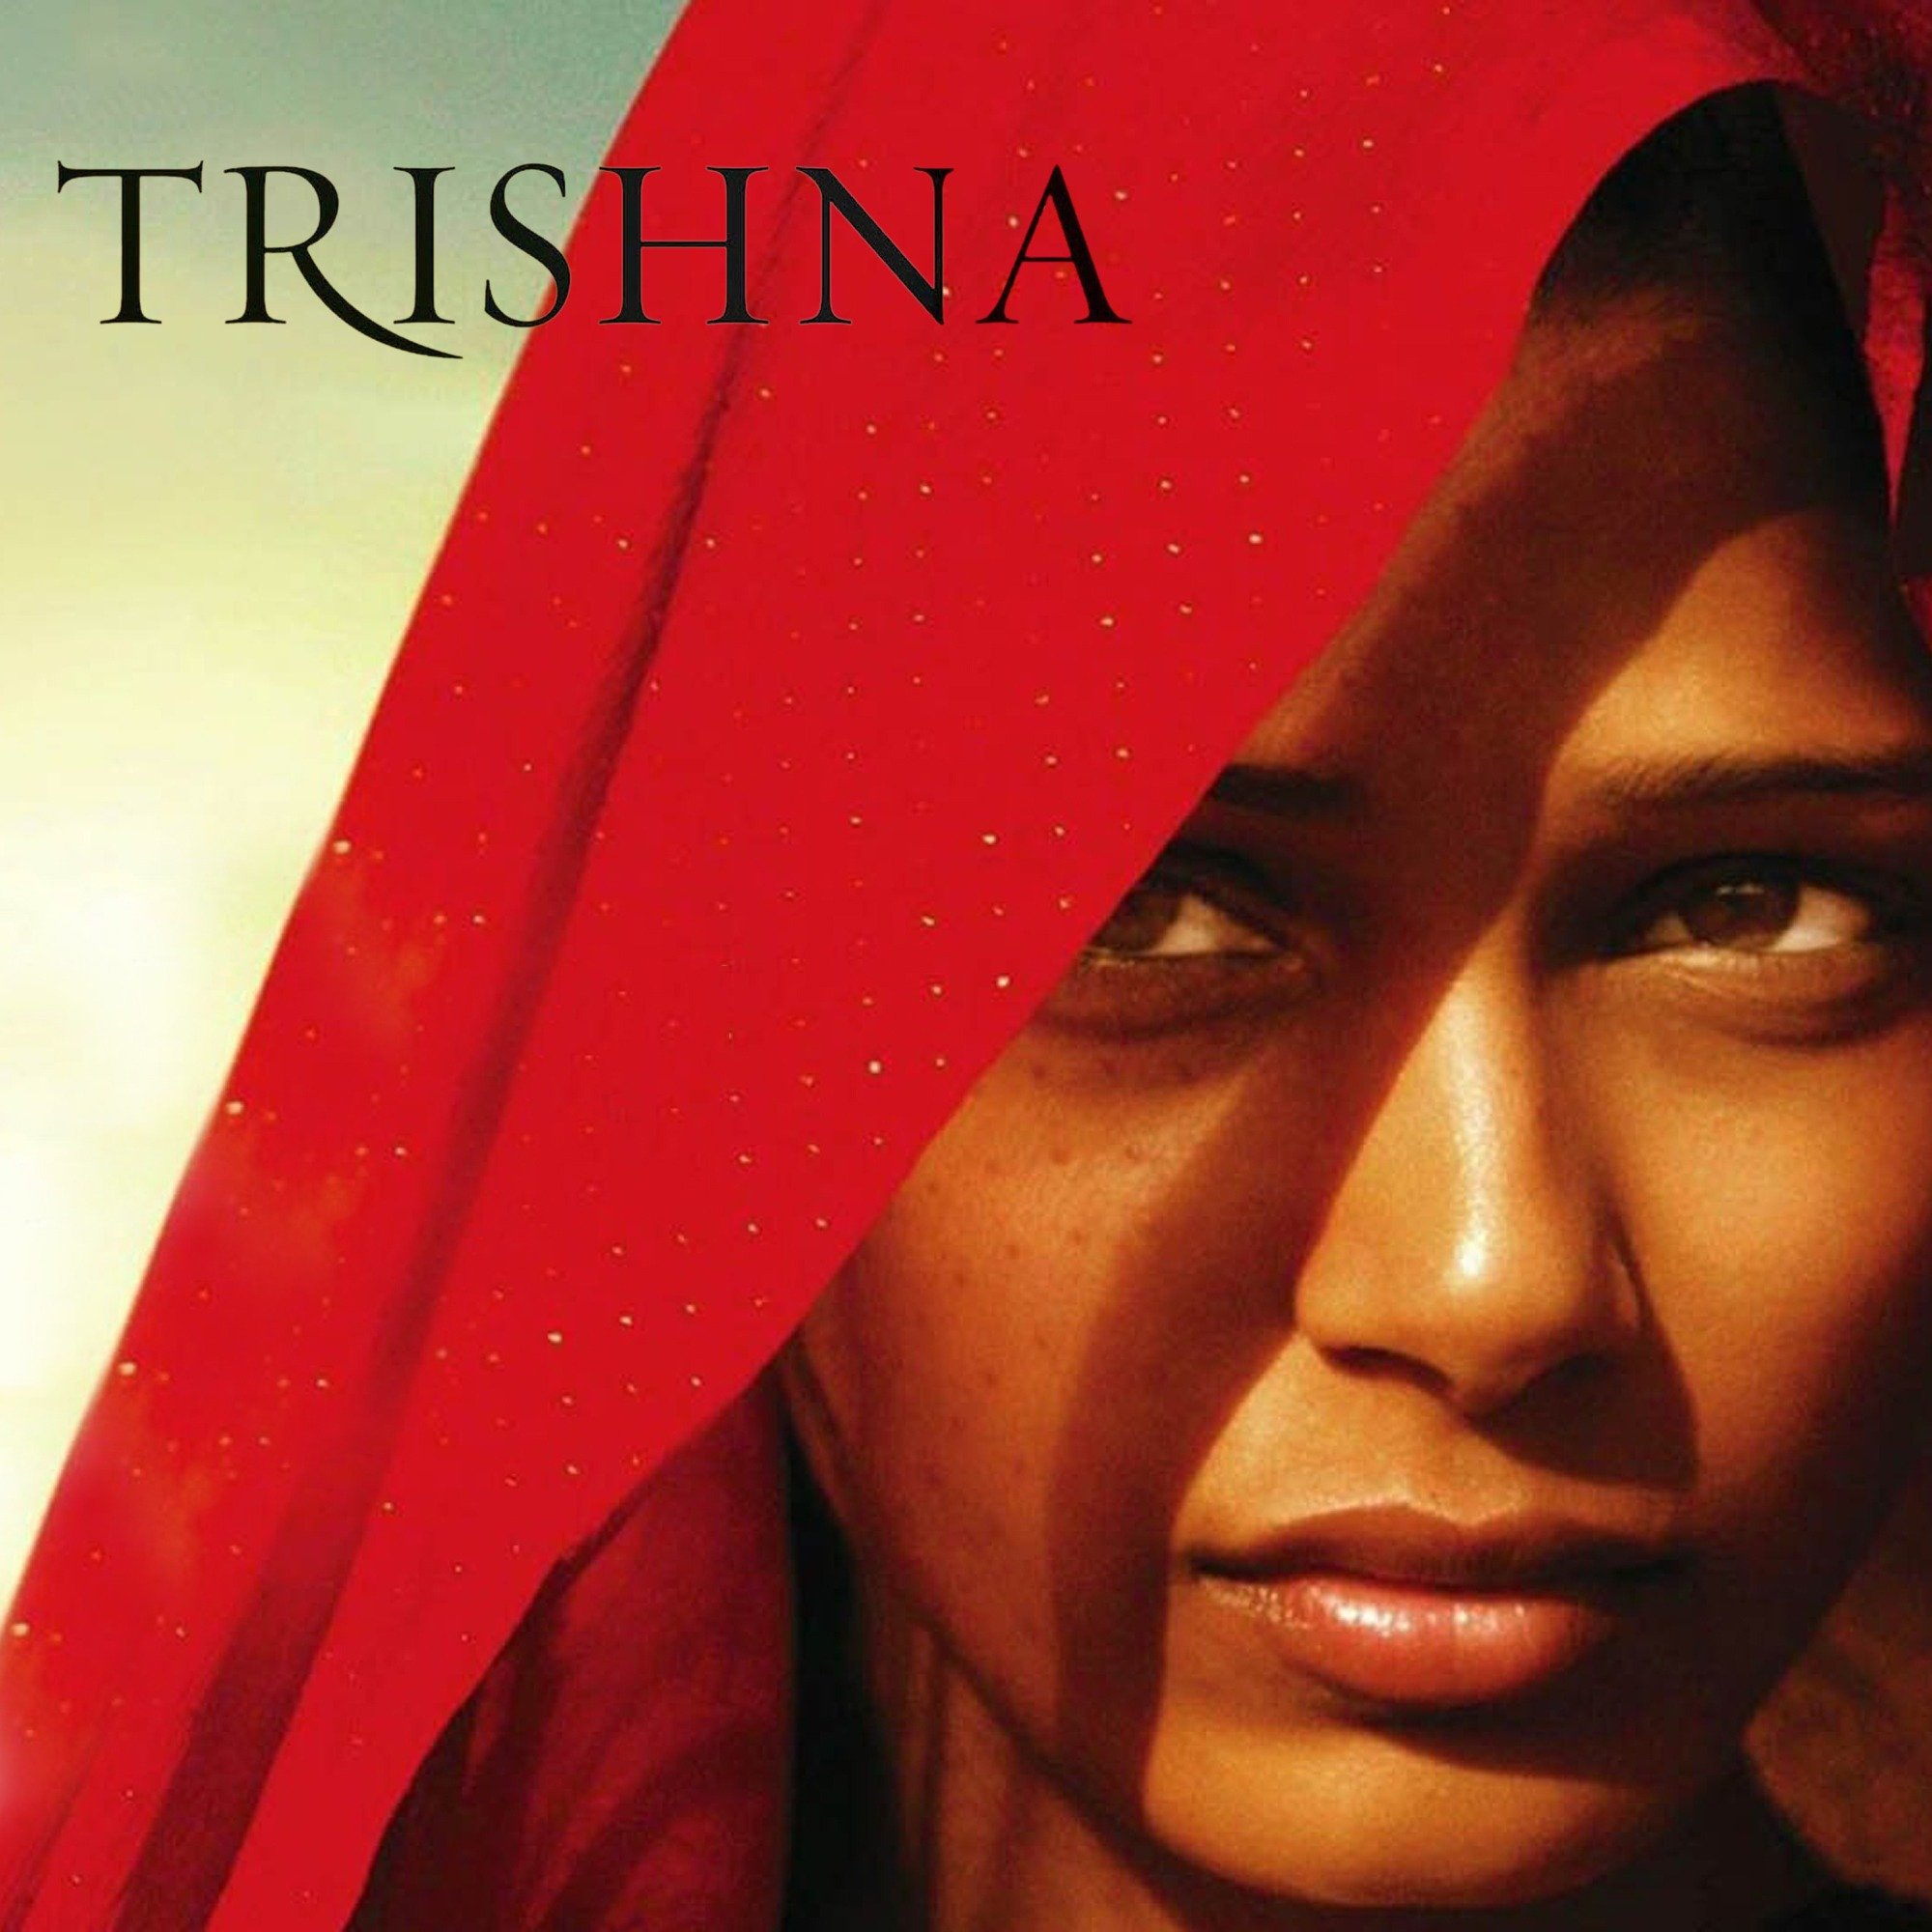 devan gunn recommends Trishna Full Movie Online